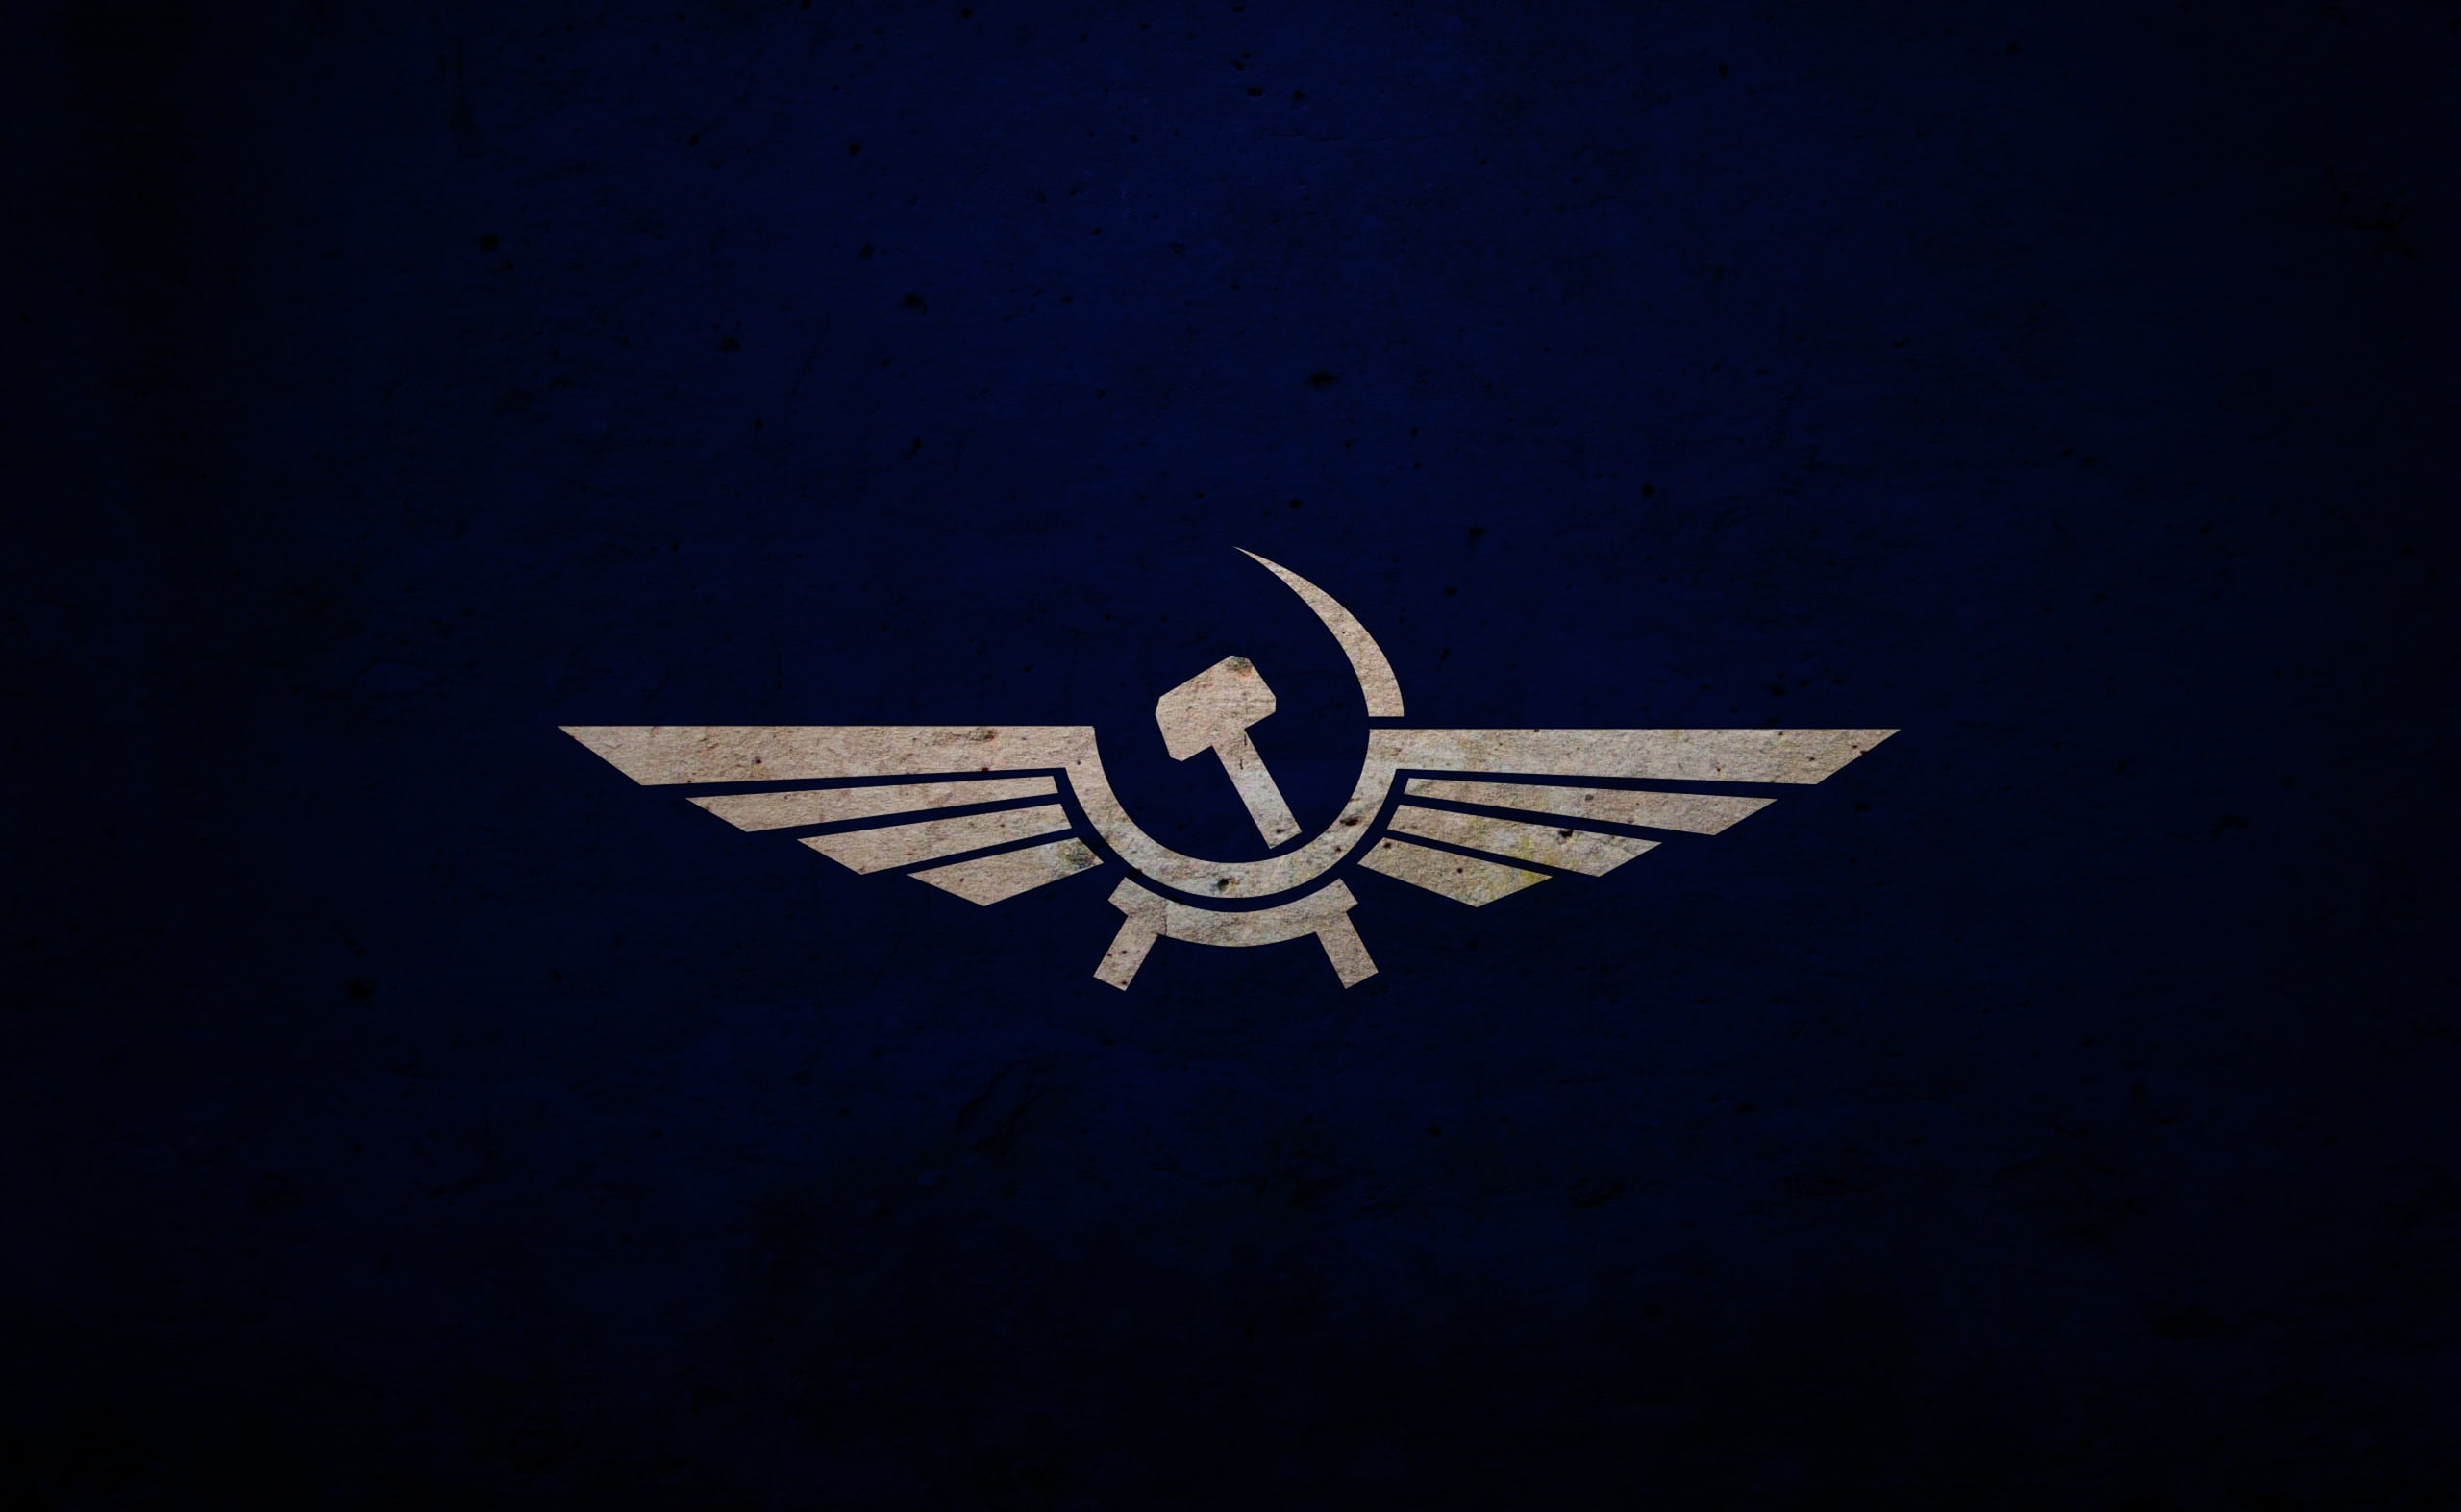 Soviet Union Symbol, white wings logo, Artistic, Grunge, no people